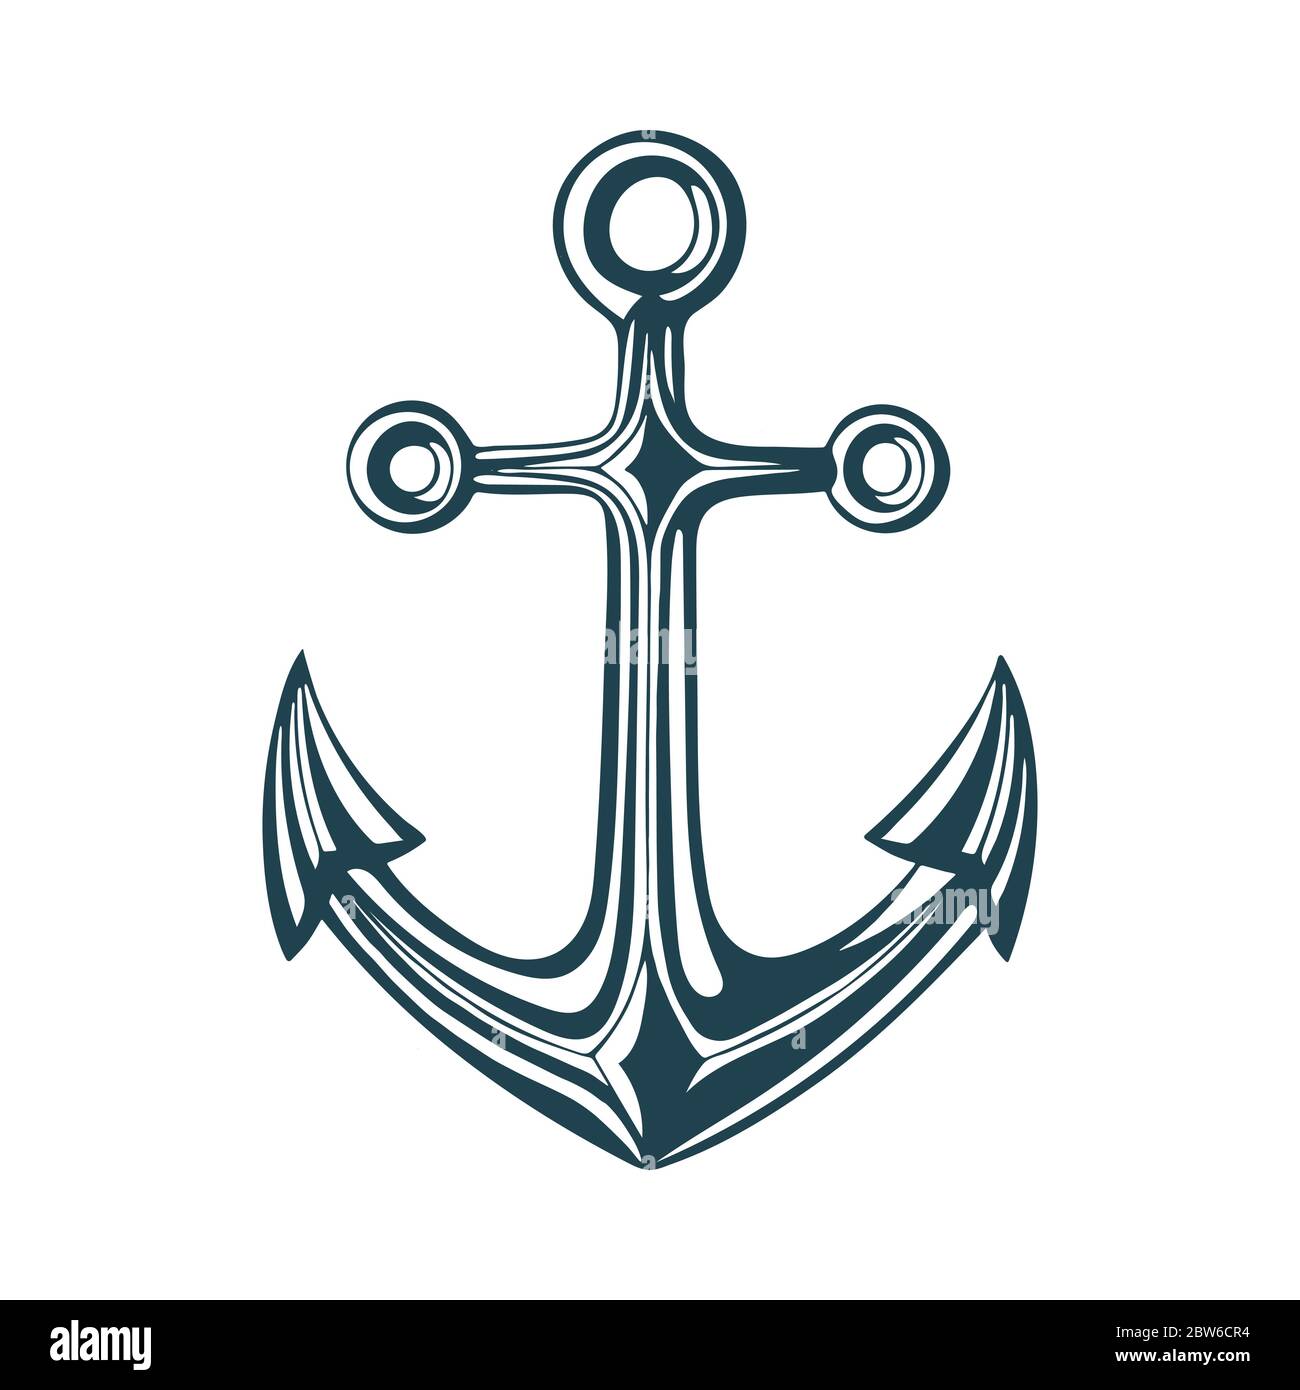 Boat anchor. Hand drawn boat anchor vector illustration. Vintage anchor engraving style drawing. Stock Vector